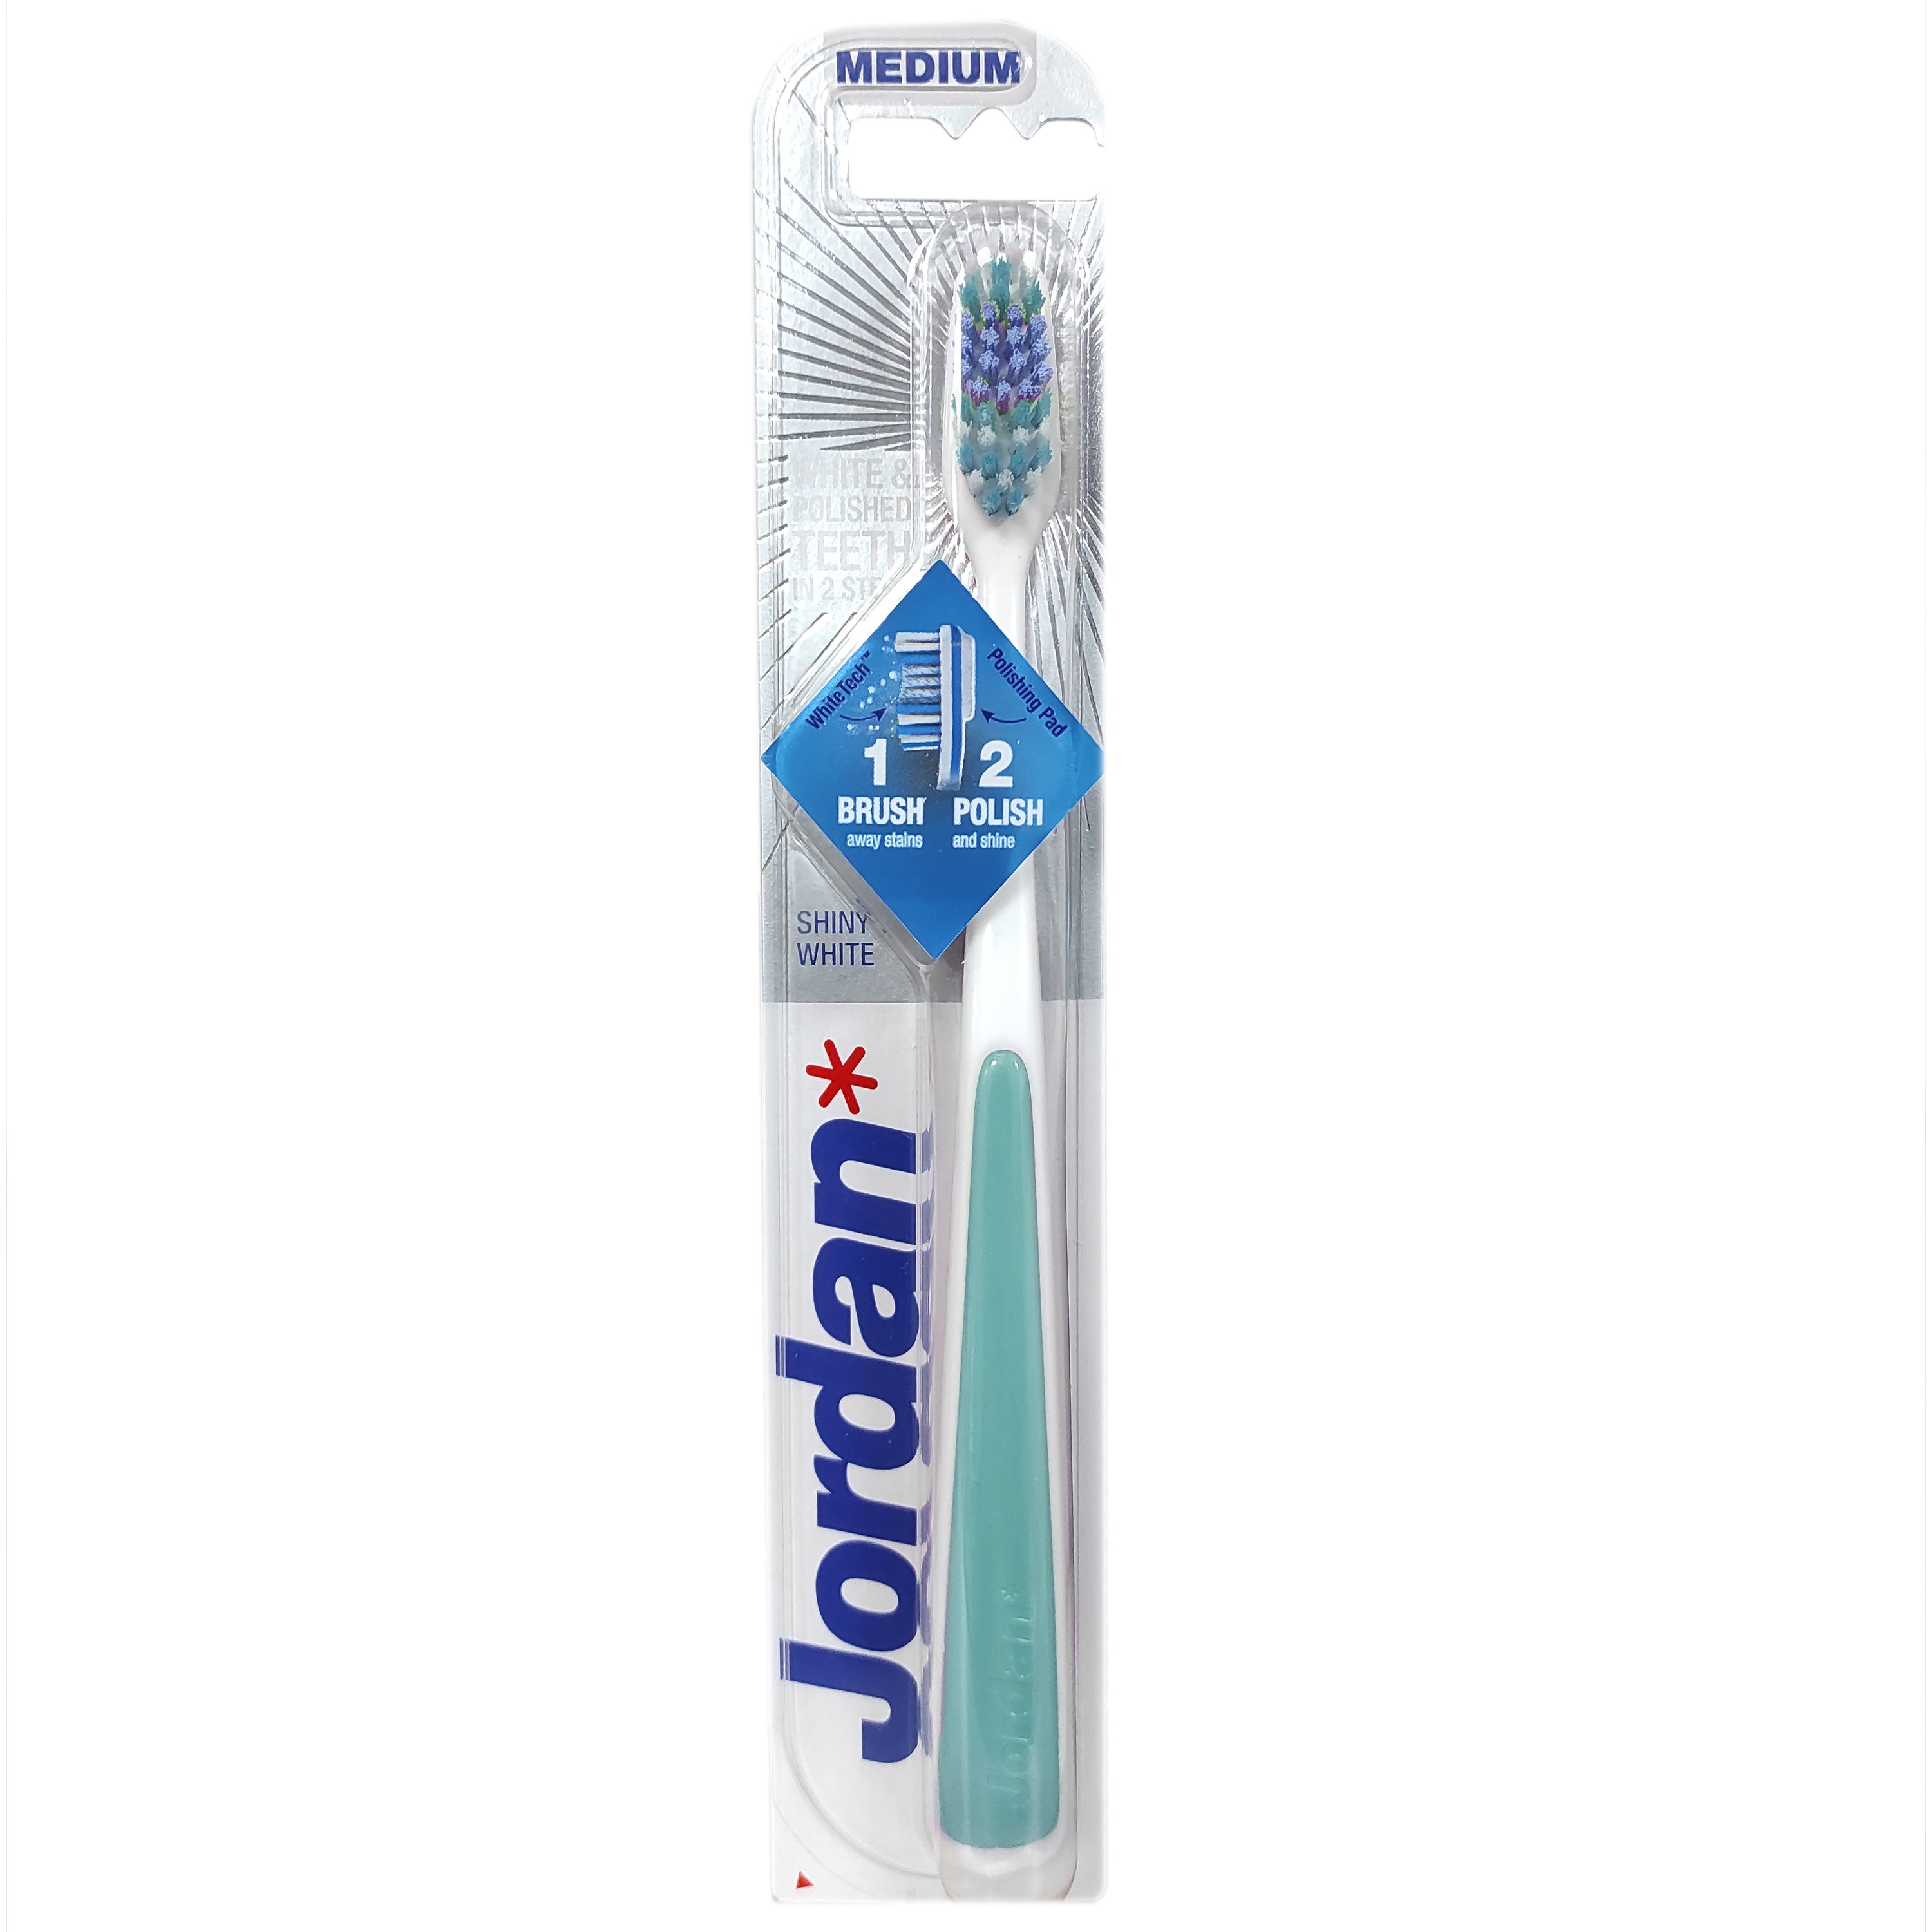 Jordan Shiny White Toothbrush Medium Μέτρια Οδοντόβουρτσα για Βαθύ Καθαρισμό & Λεύκανση 1 Τεμάχιο – Πετρόλ